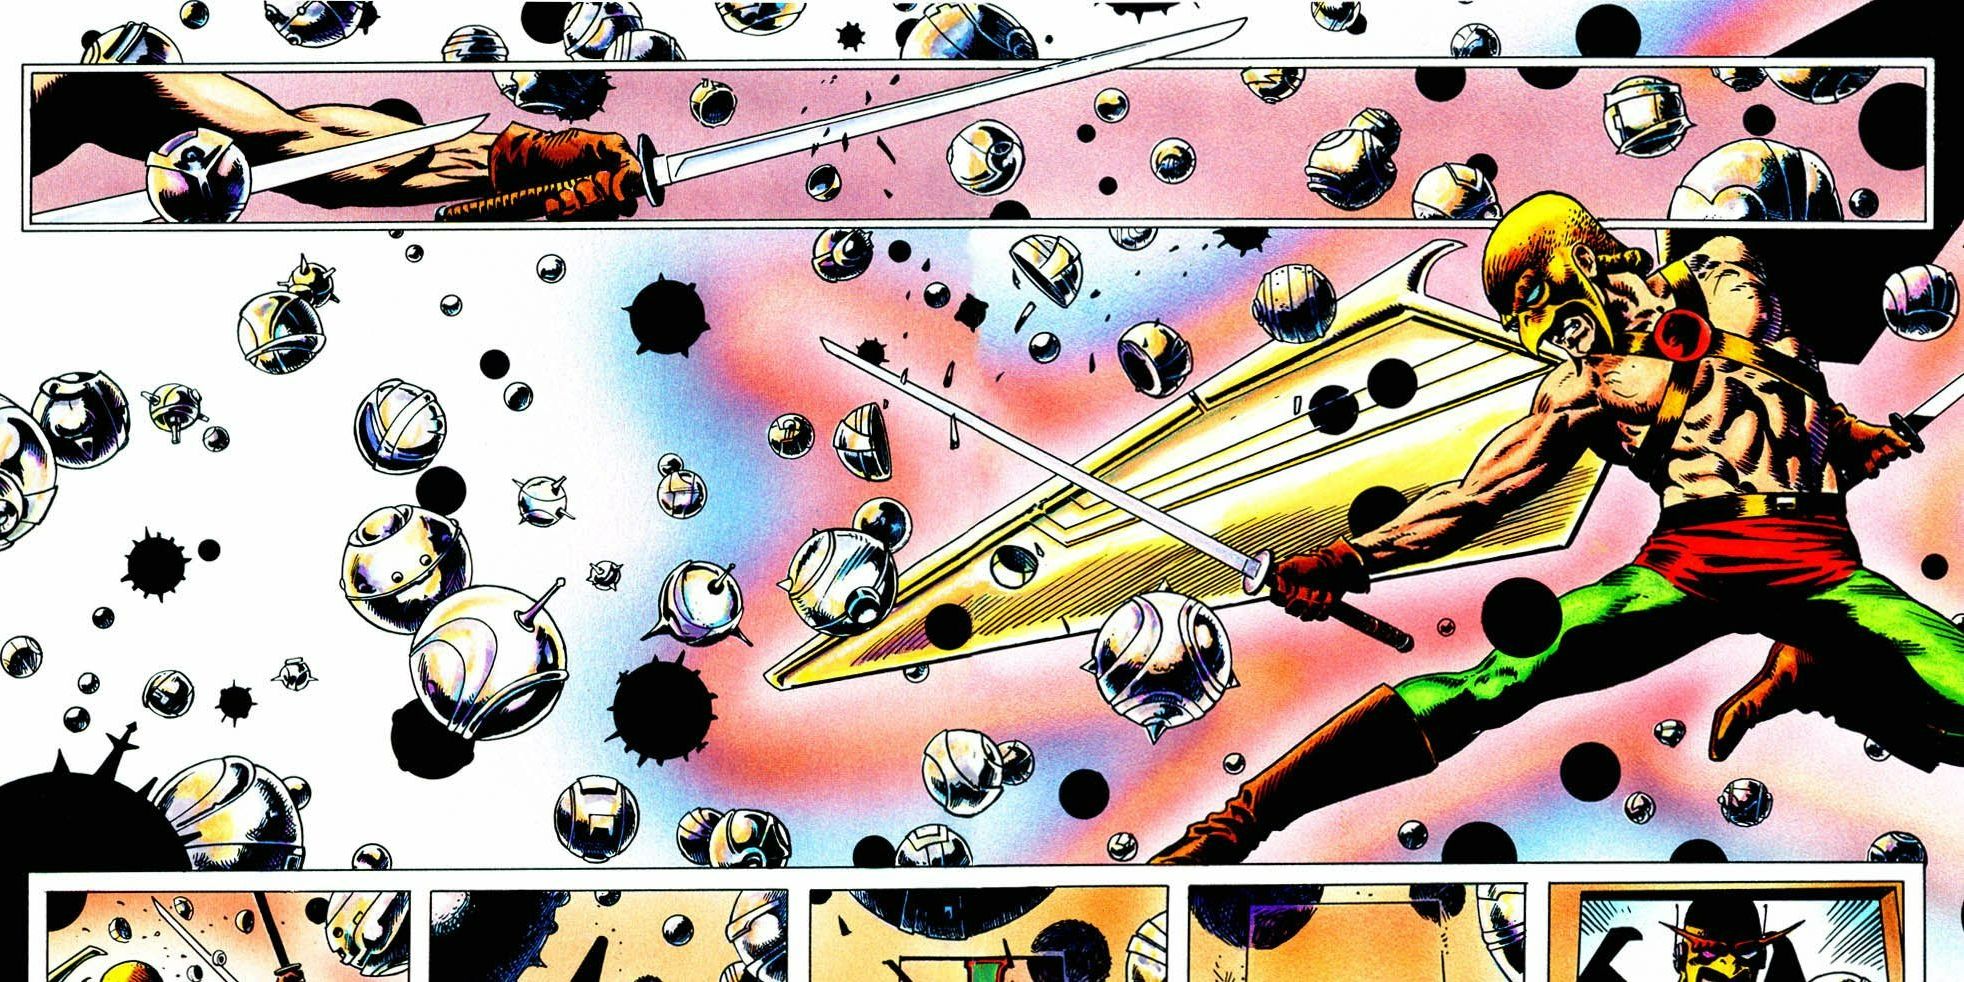 Hawkman holding sword in space in Hawkworld comic